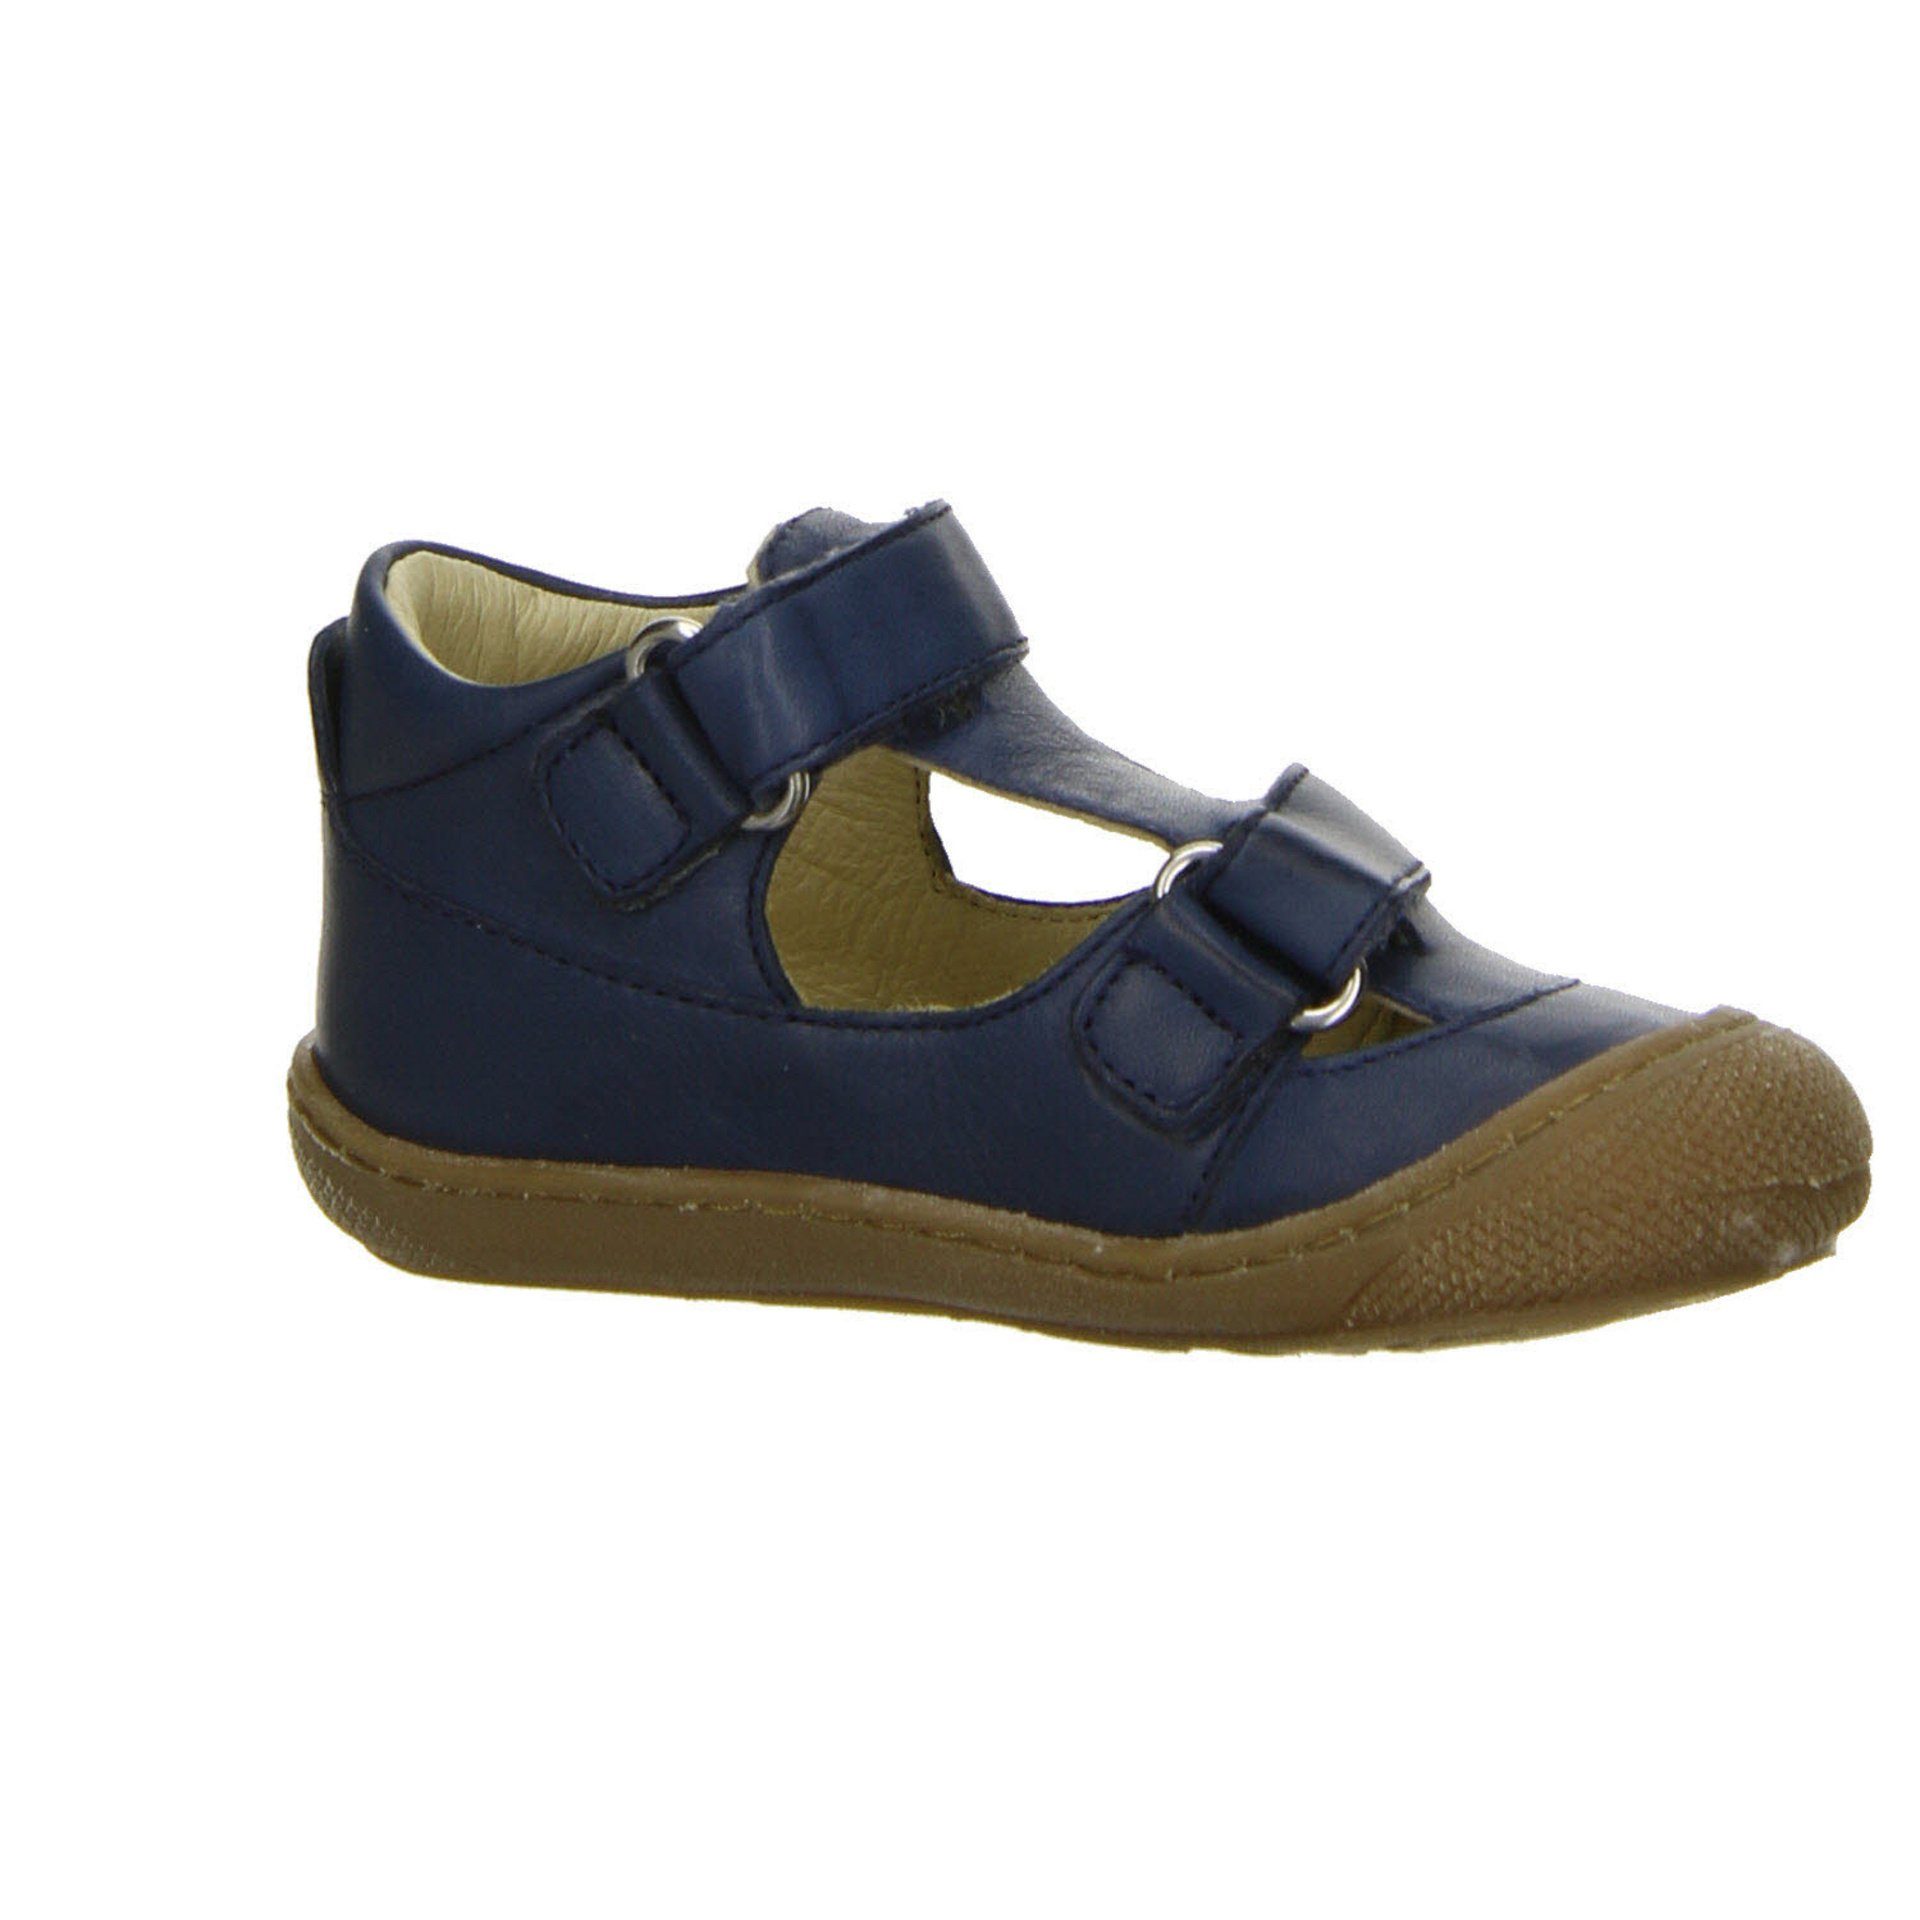 Naturino Minilette Glattleder Schuhe blau Puffy Jungen Lauflernschuh Sandalen dunkel